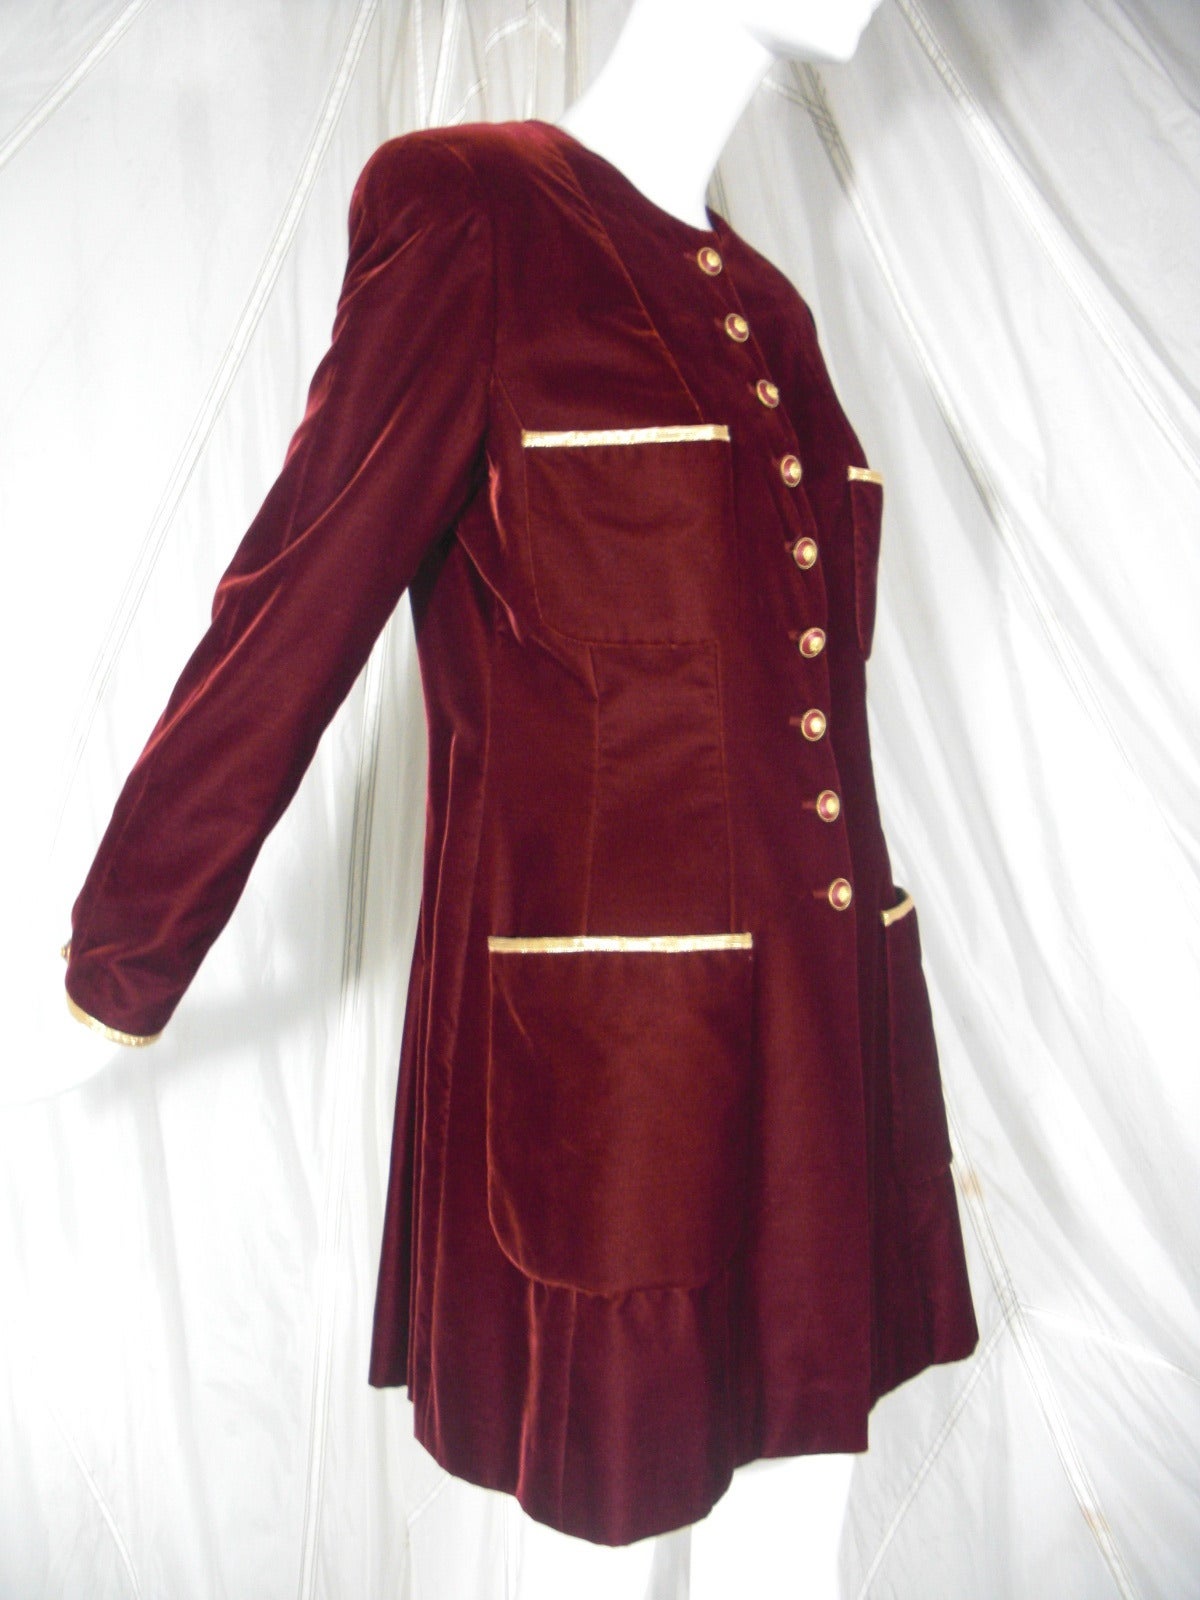 napoleon style jacket